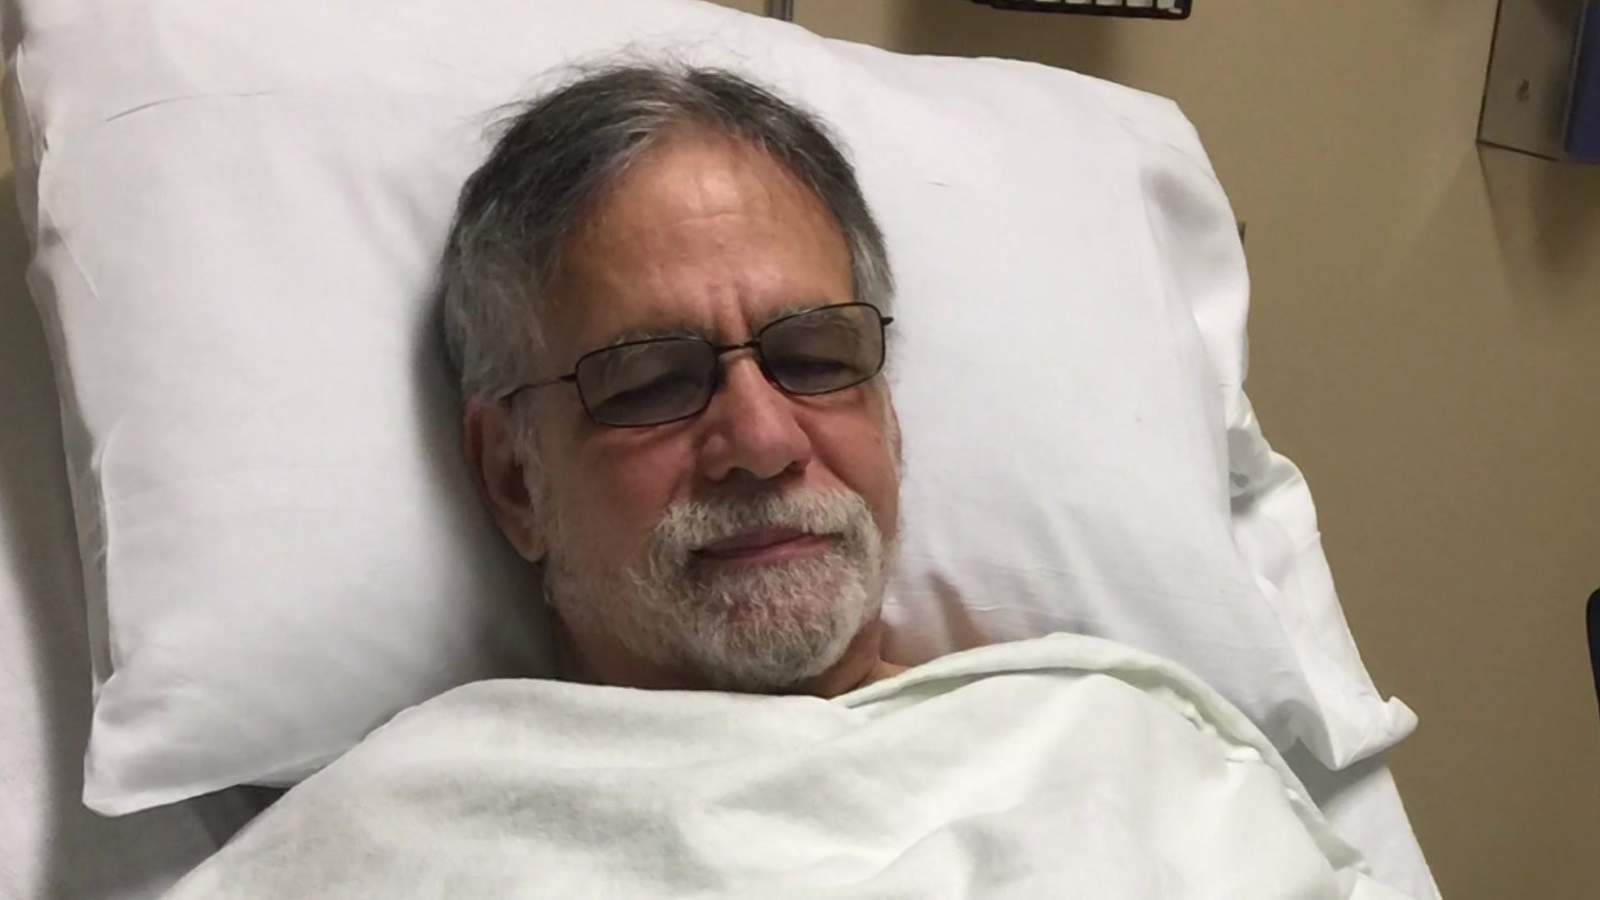 Kidney transplant for Houston man canceled for the third time amid coronavirus crisis